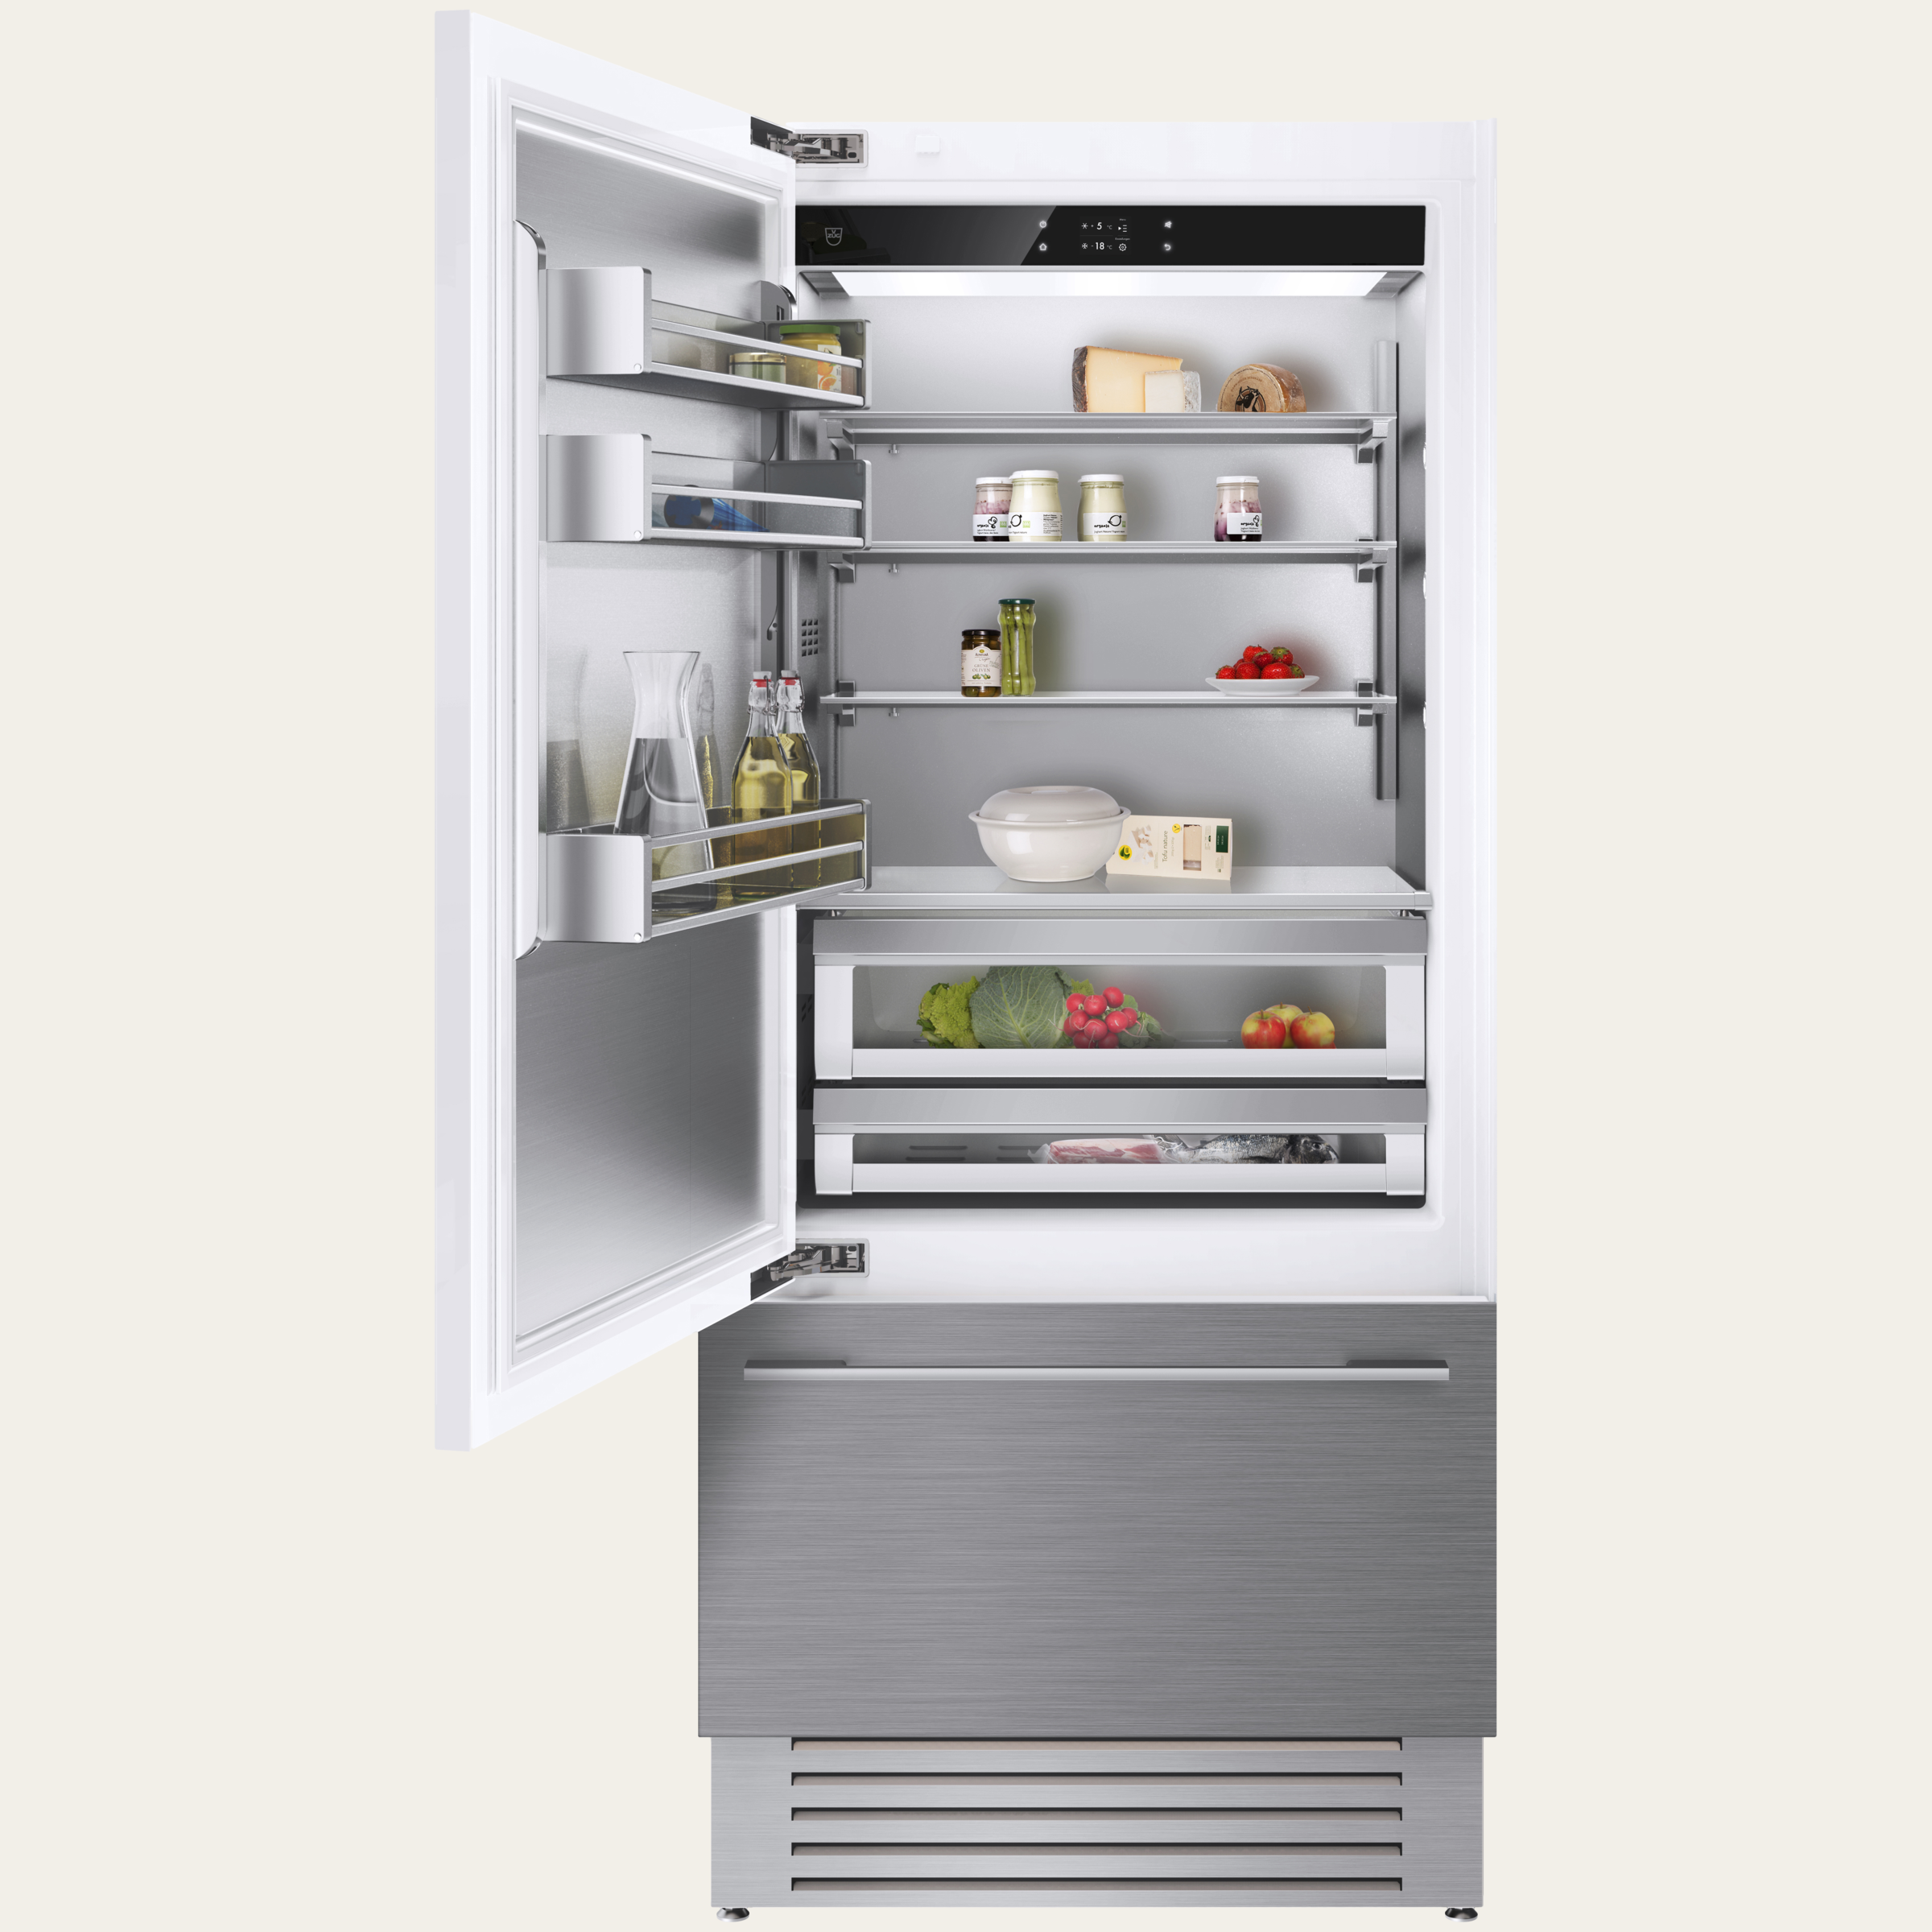 V-ZUG Refrigerator/freezer CombiCooler V6000 Supreme, Standard width: 90 cm, Standard height: 205 cm, Fully integratable, Door hinge: Left, Energy efficiency rating: A++, TouchControl, NoFrost